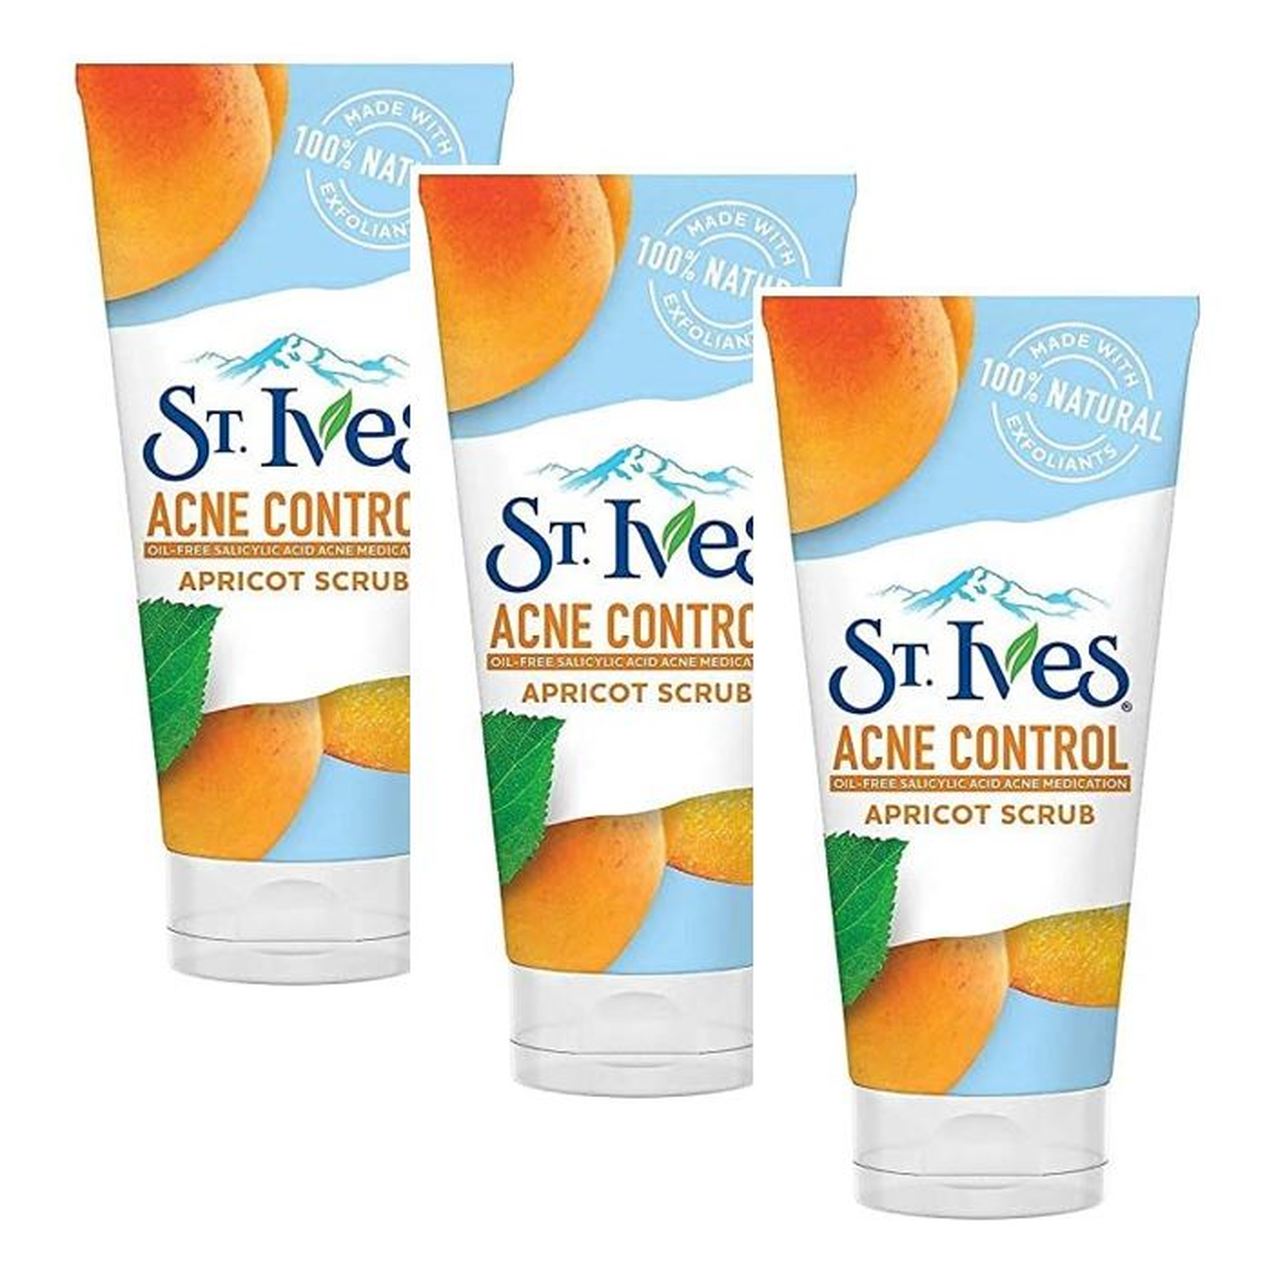 St. Ives Acne Control Apricot Scrub 6 Oz